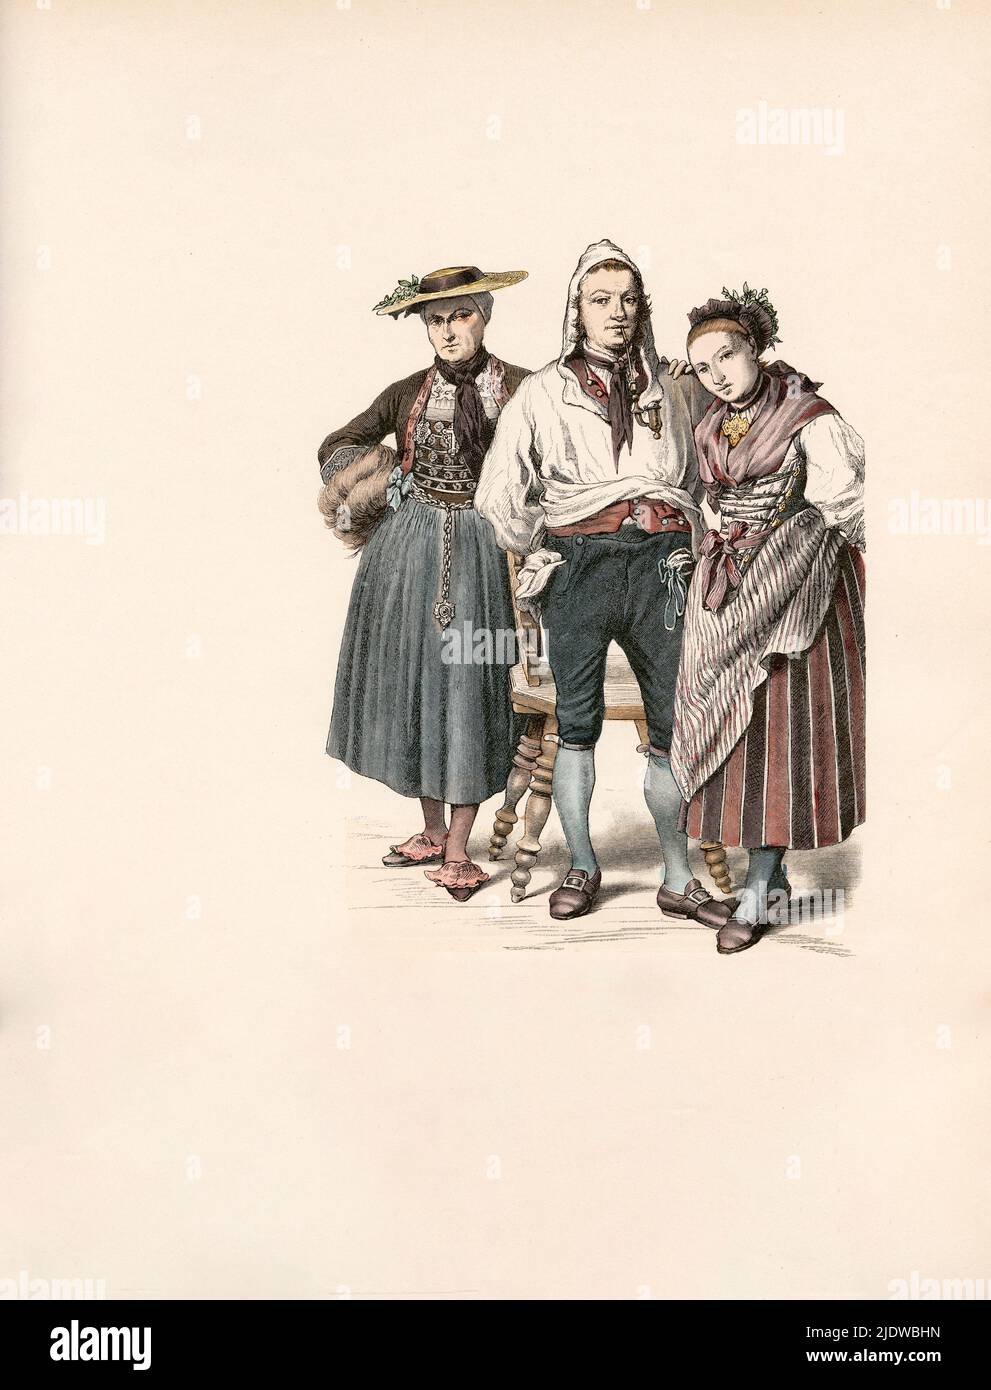 Swiss Costumes, Zug, Schwyz, Switzerland, late 18th Century, Illustration, The History of Costume, Braun & Schneider, Munich, Germany, 1861-1880 Stock Photo